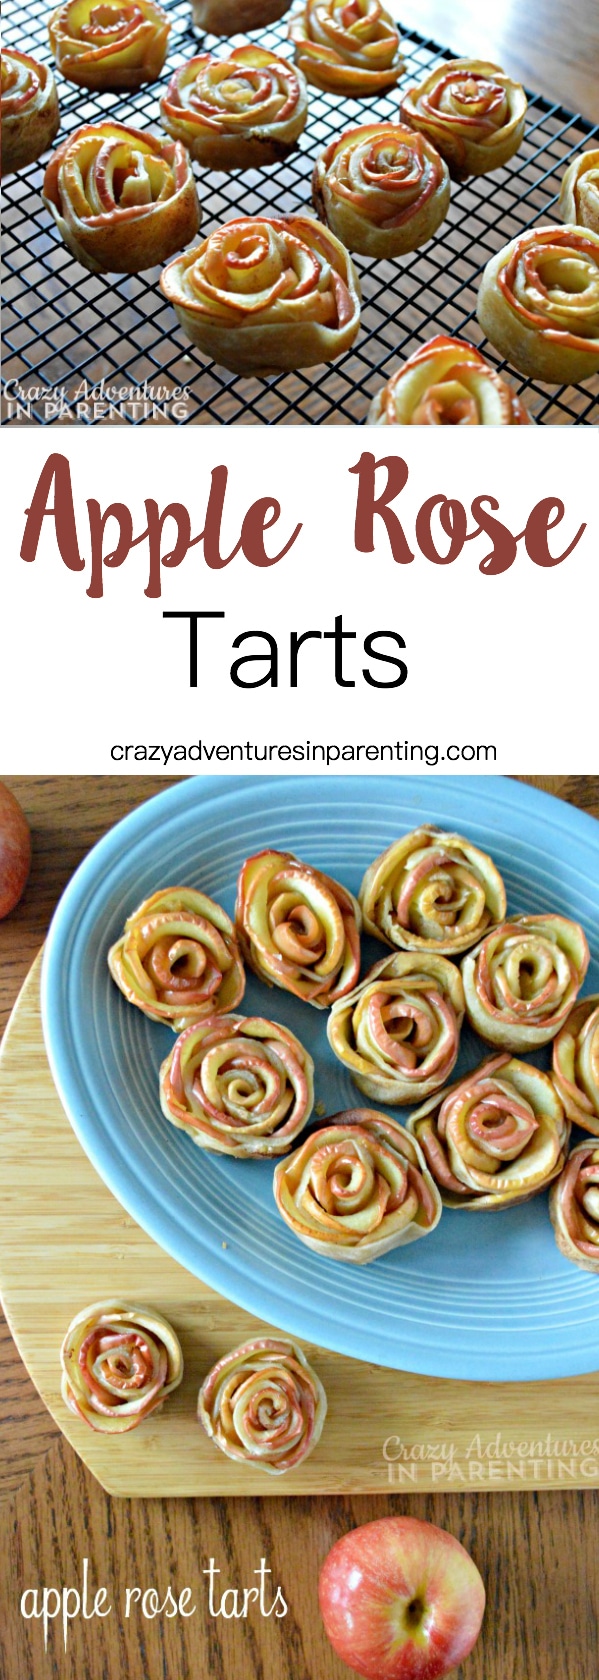 Apple Rose Tarts